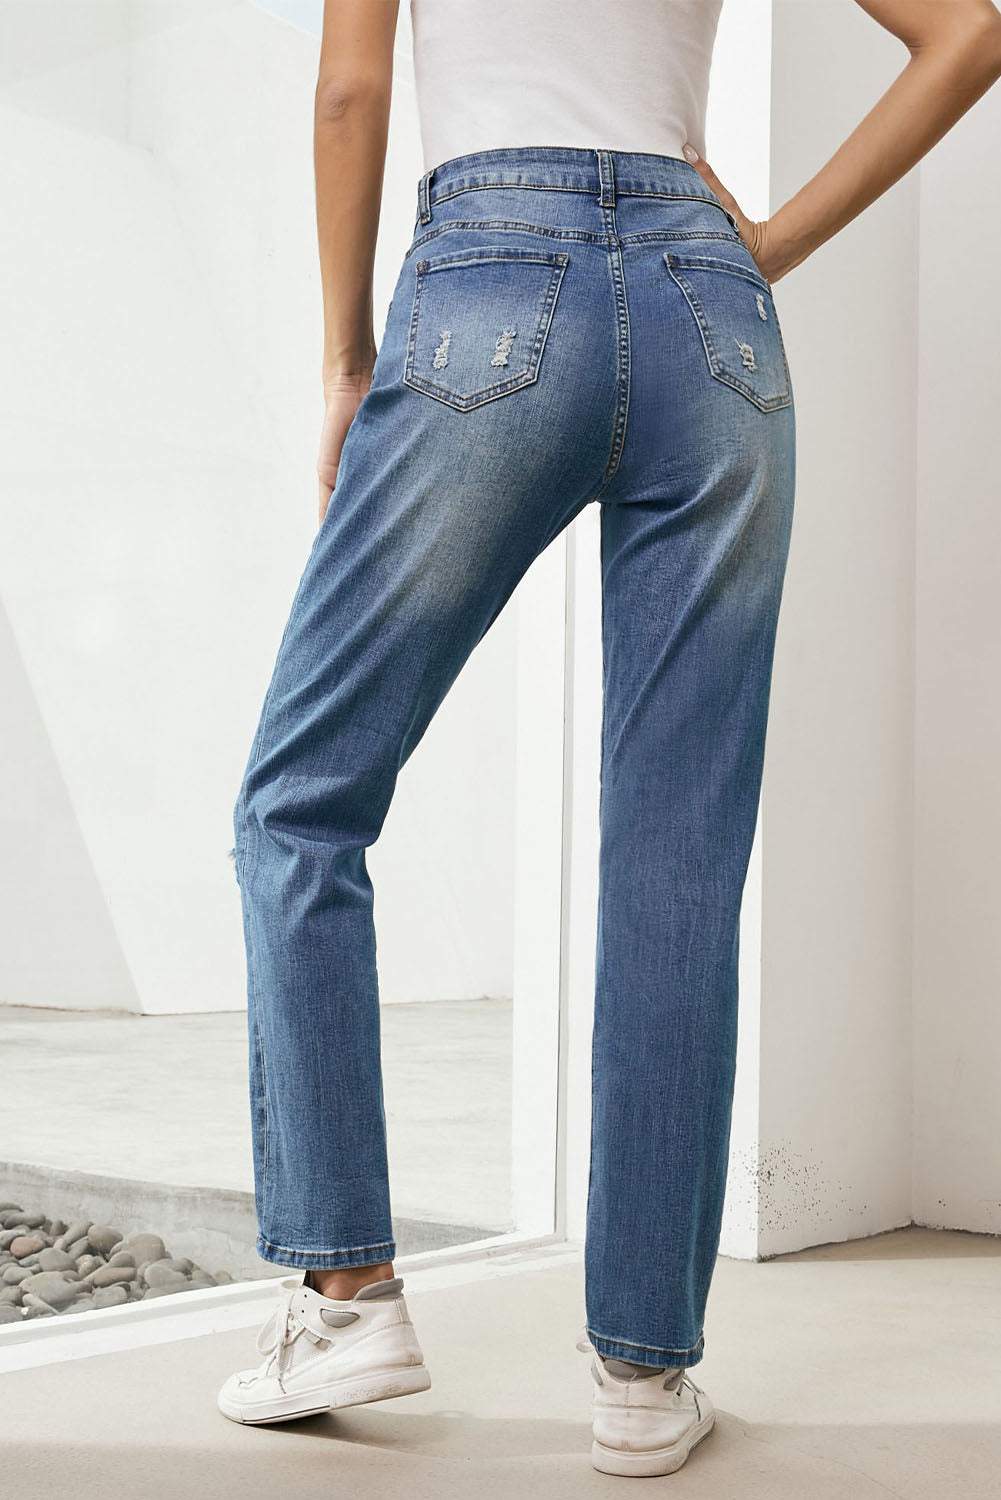 Sky Blue Heart-shape American Flag Patch Frayed Jeans Graphic Pants JT's Designer Fashion